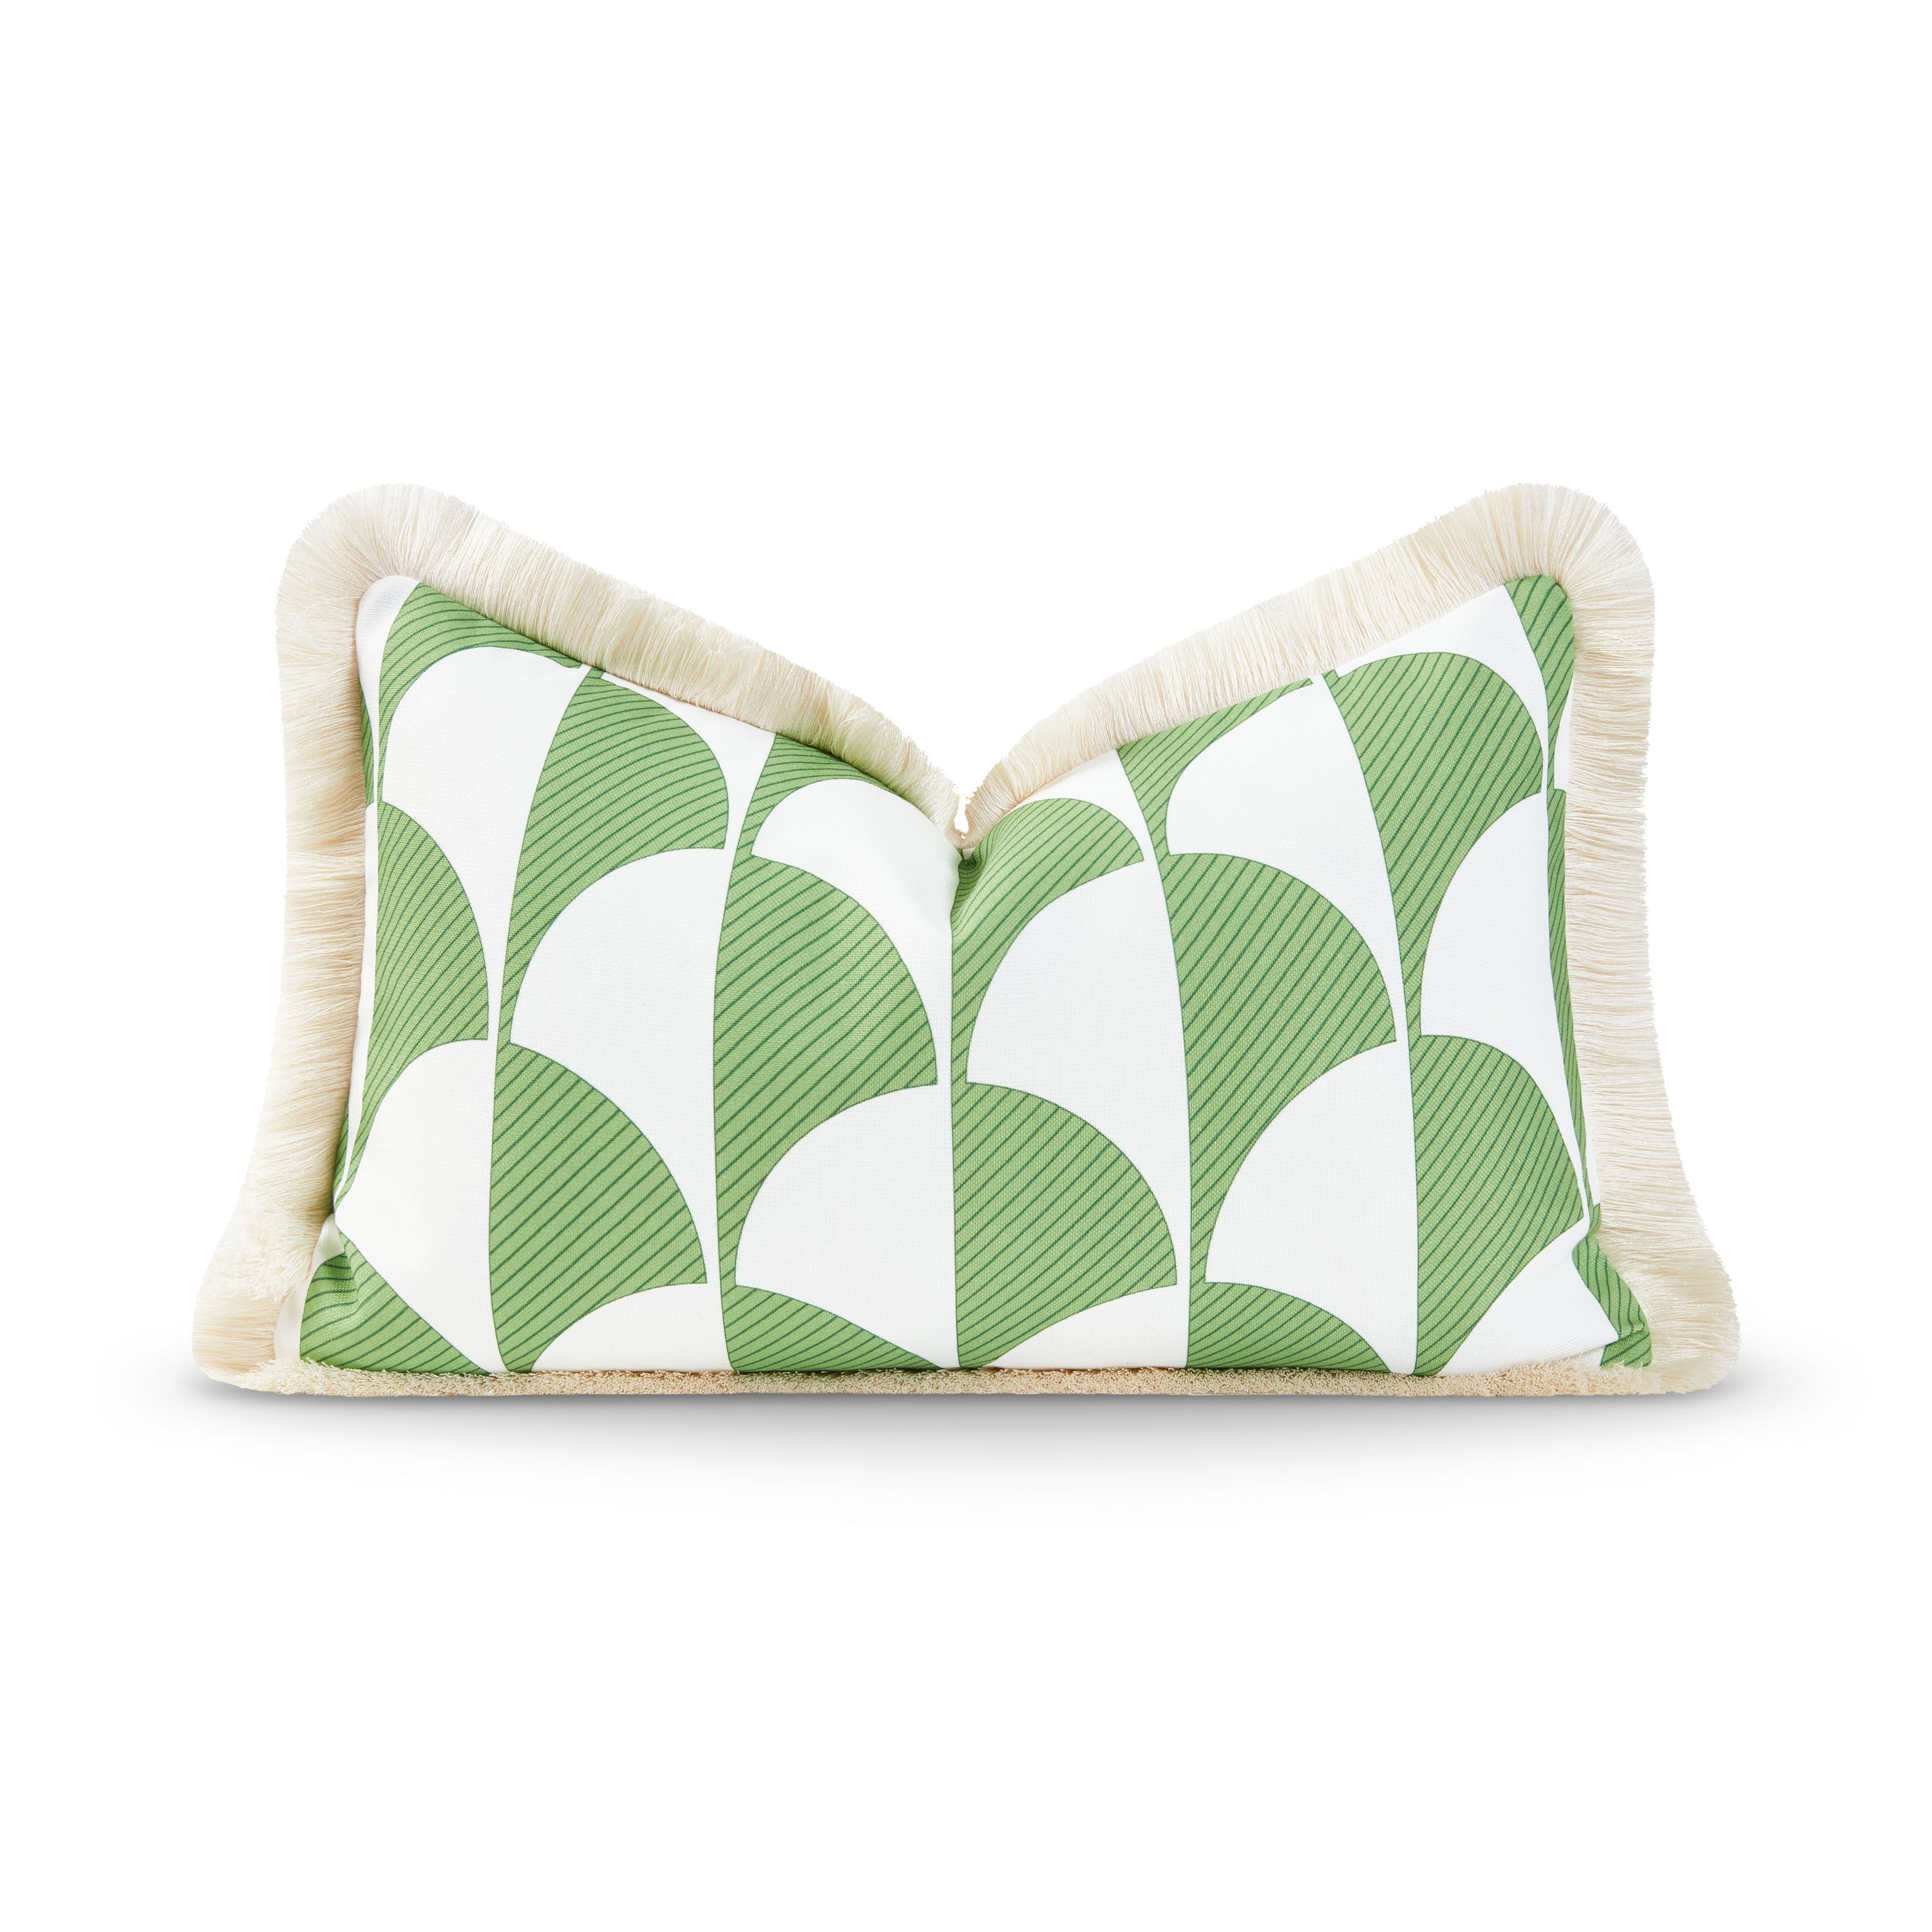 Coastal Indoor Outdoor Lumbar Pillow Cover, Scale Motif Fringe, Green, 12"x20"